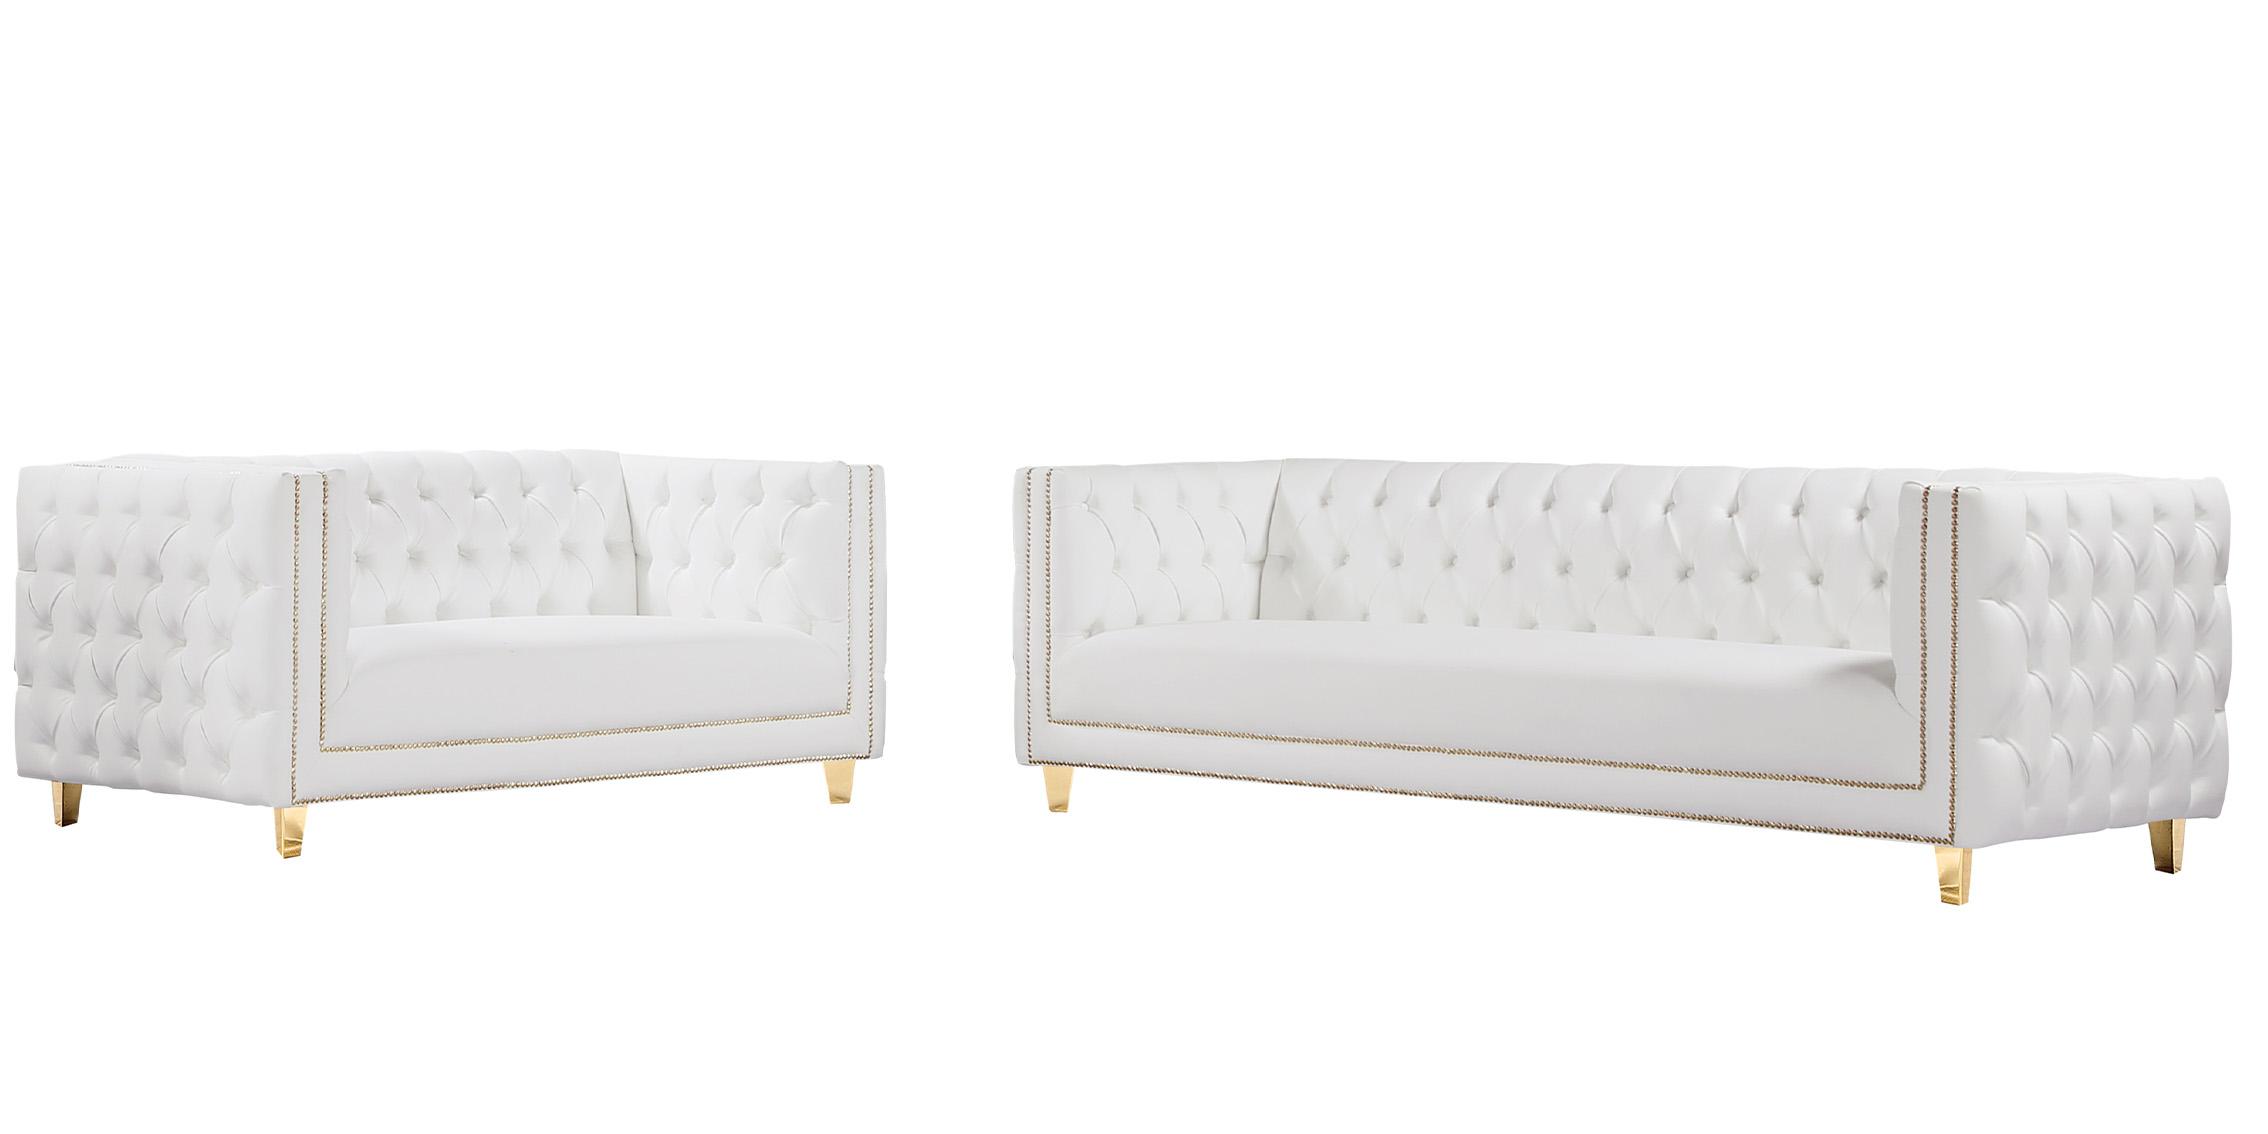 Contemporary, Modern Sofa Set MICHELLE 651White 651White-S-Set-2 in White, Gold Faux Leather